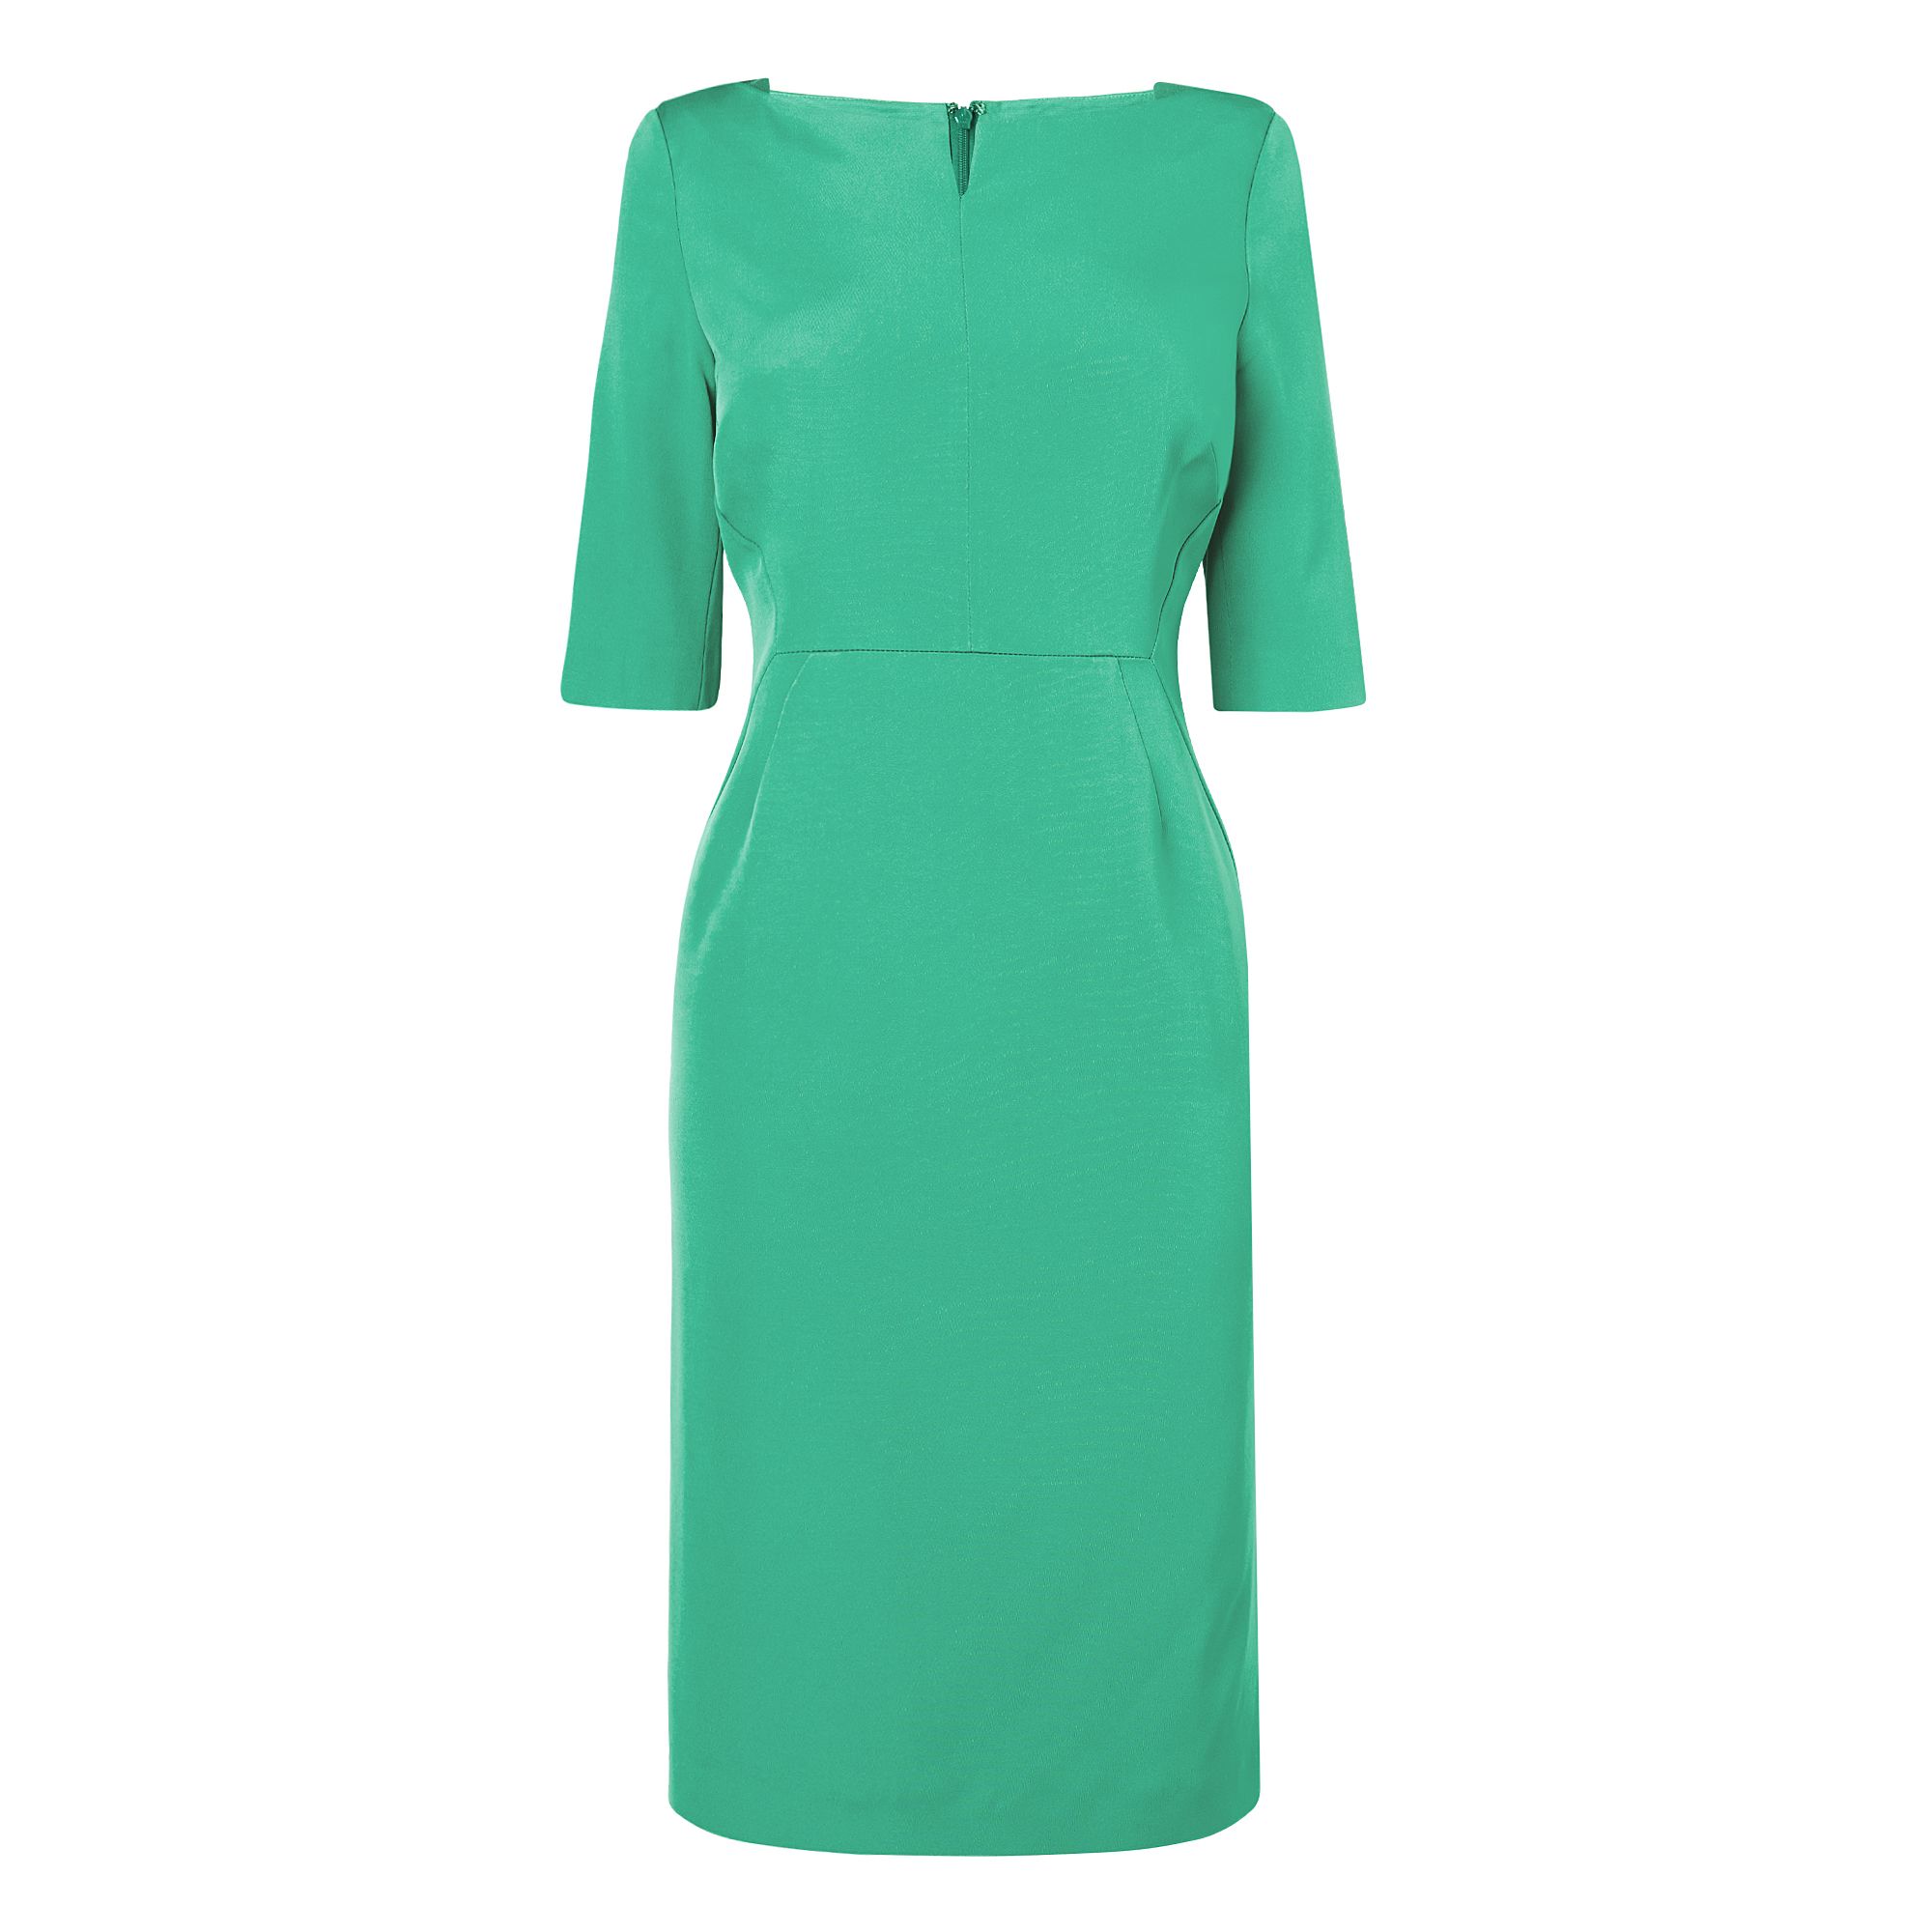 L.k.bennett Tan Fitted Dress in Green (Emerald) | Lyst